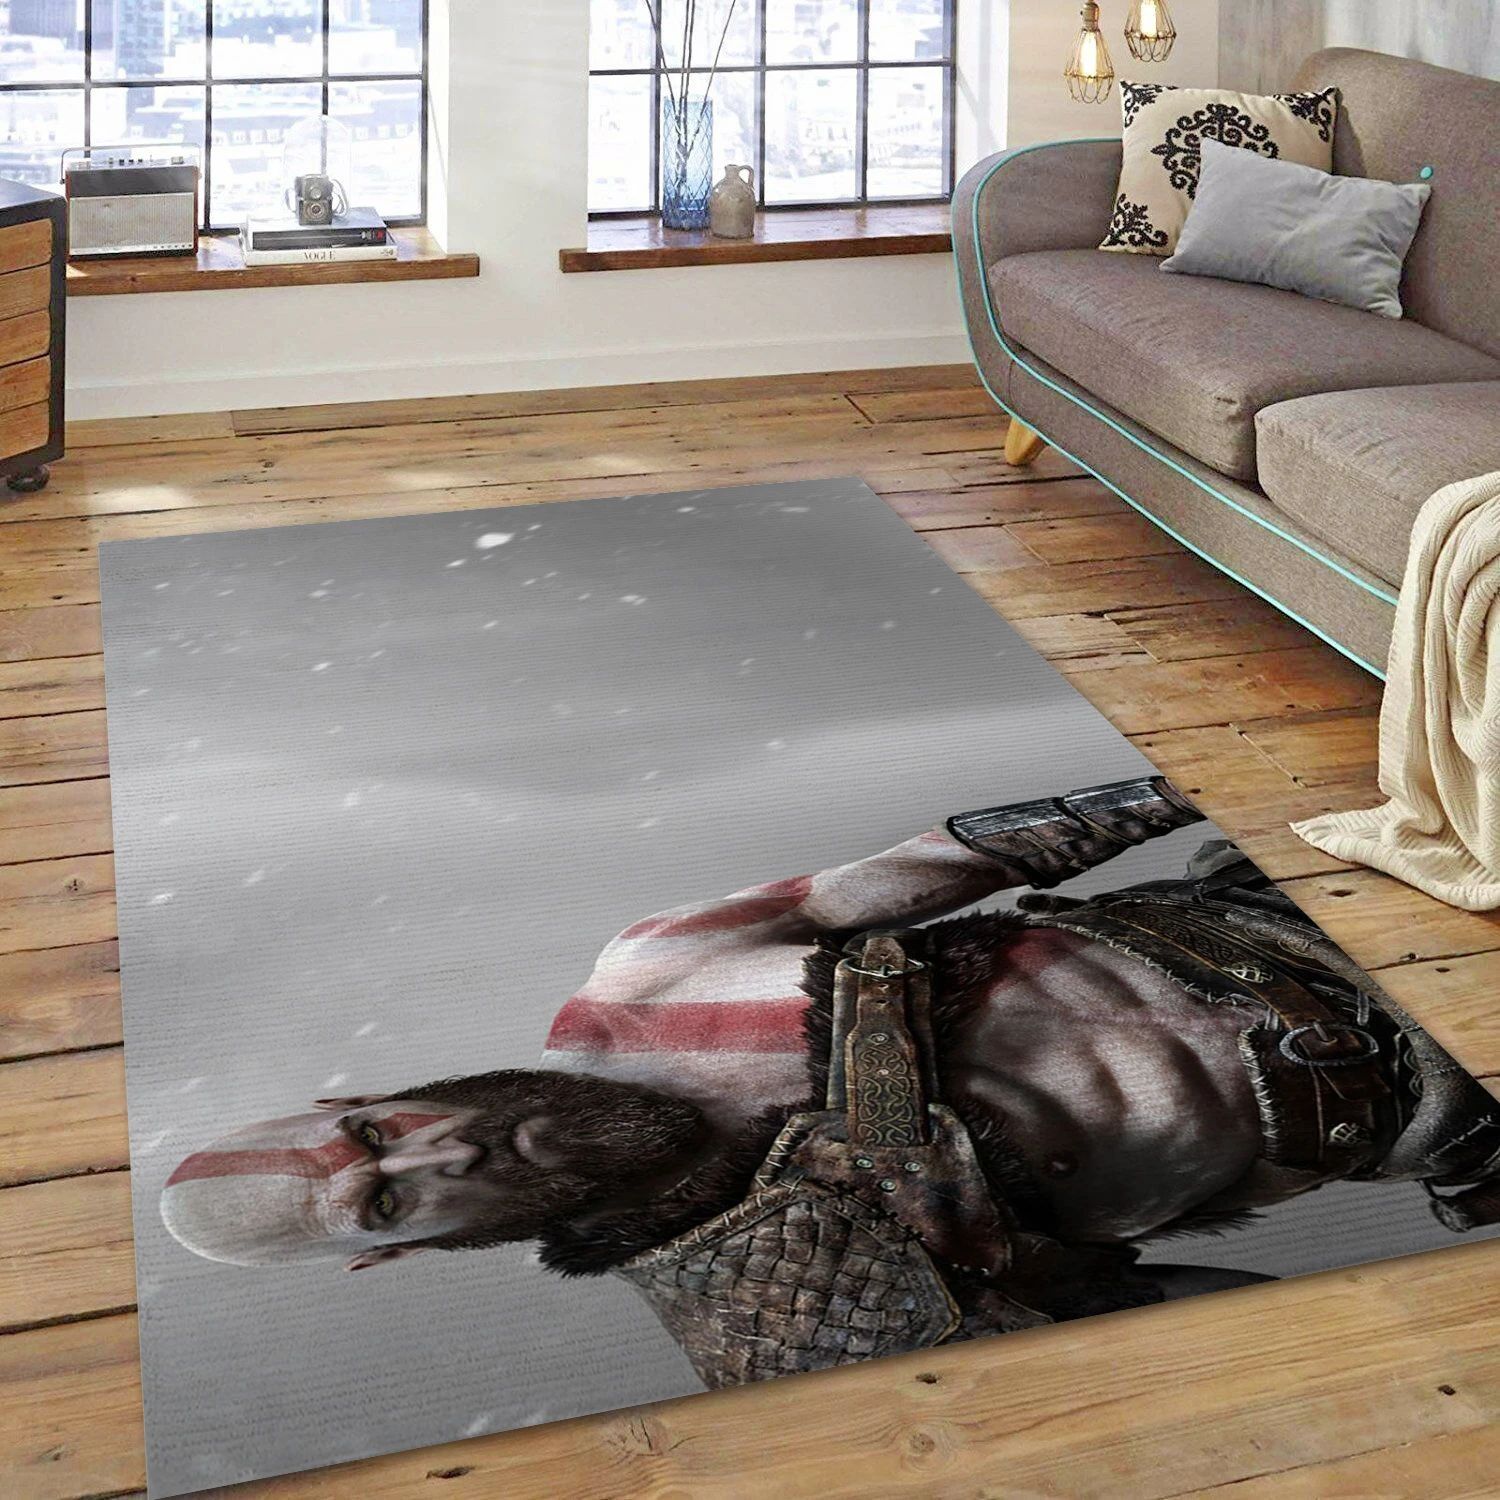 Kratos God Of War Video Game Area Rug Area, Bedroom Rug - Christmas Gift Decor - Indoor Outdoor Rugs 1